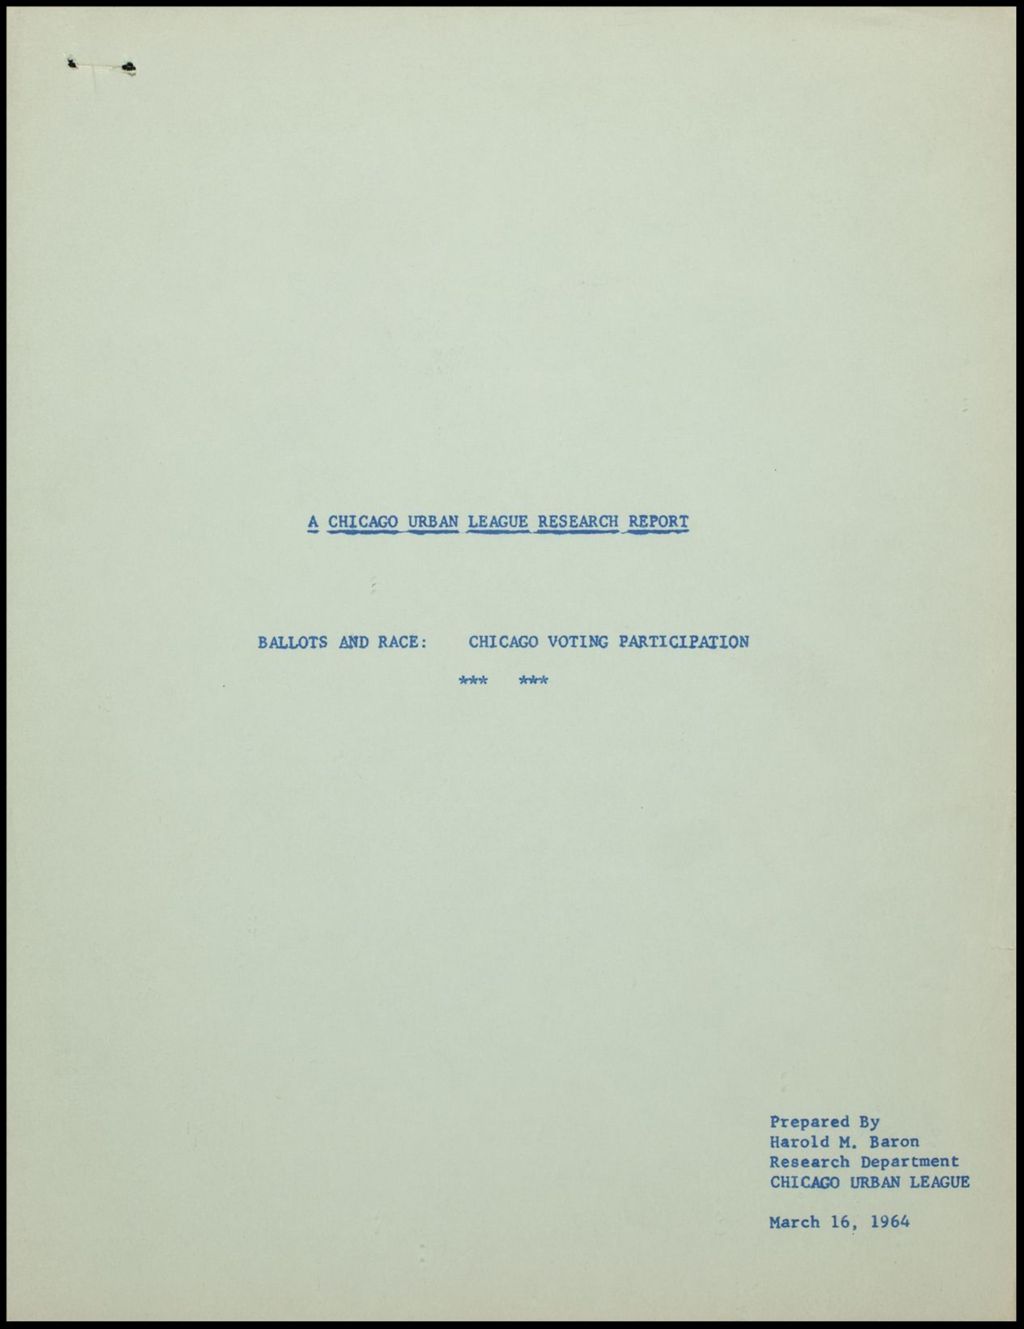 Miniature of Moynihan Report on the Negro Family, 1965 (Folder III-2473)